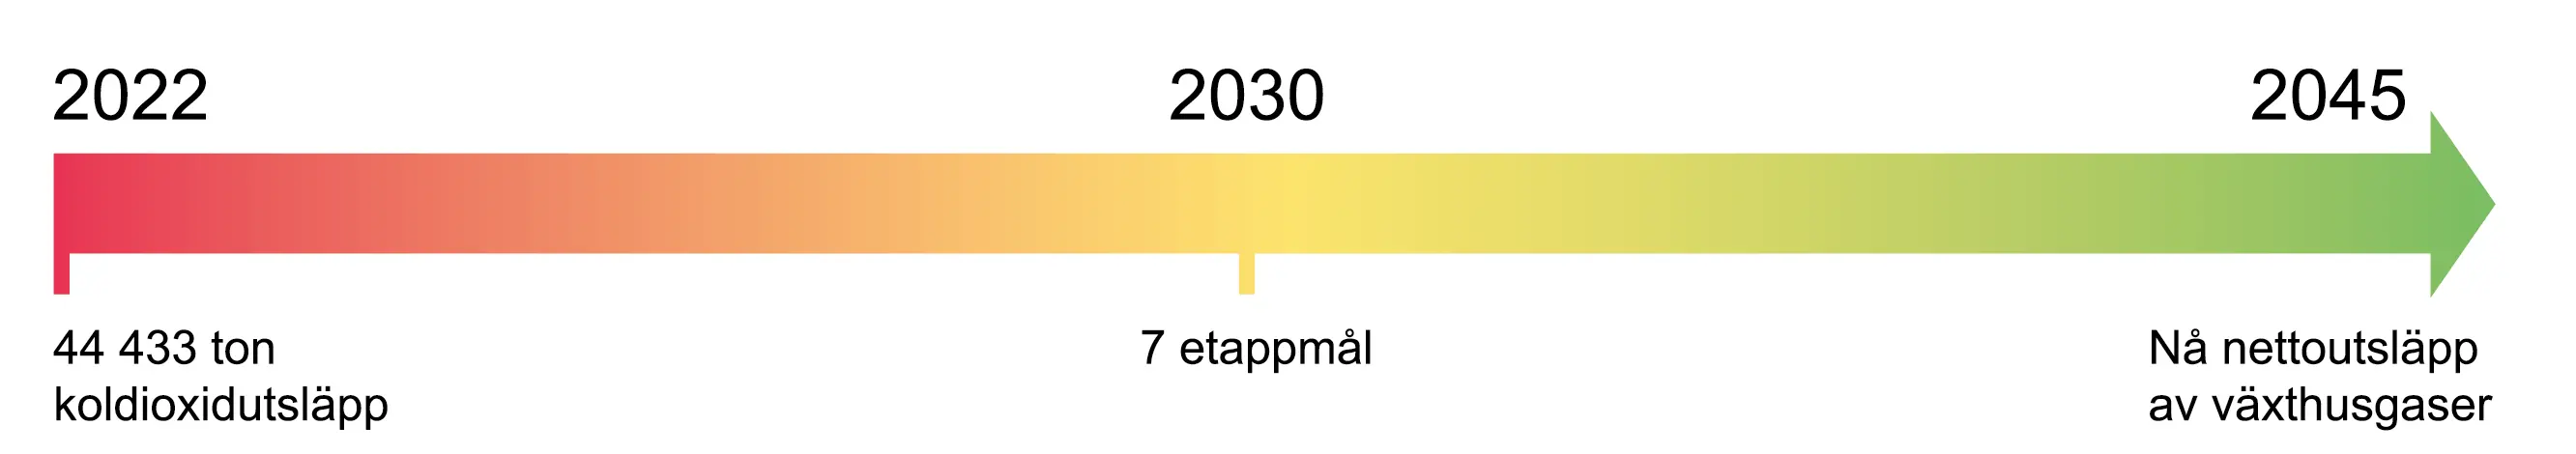 En tidslinje: På år 2022 står det 44433 ton koldioxidutsläpp, på år 2030 står det 7 etappmål, på år 2045 står det nå nettoutsläpp av växthusgaser